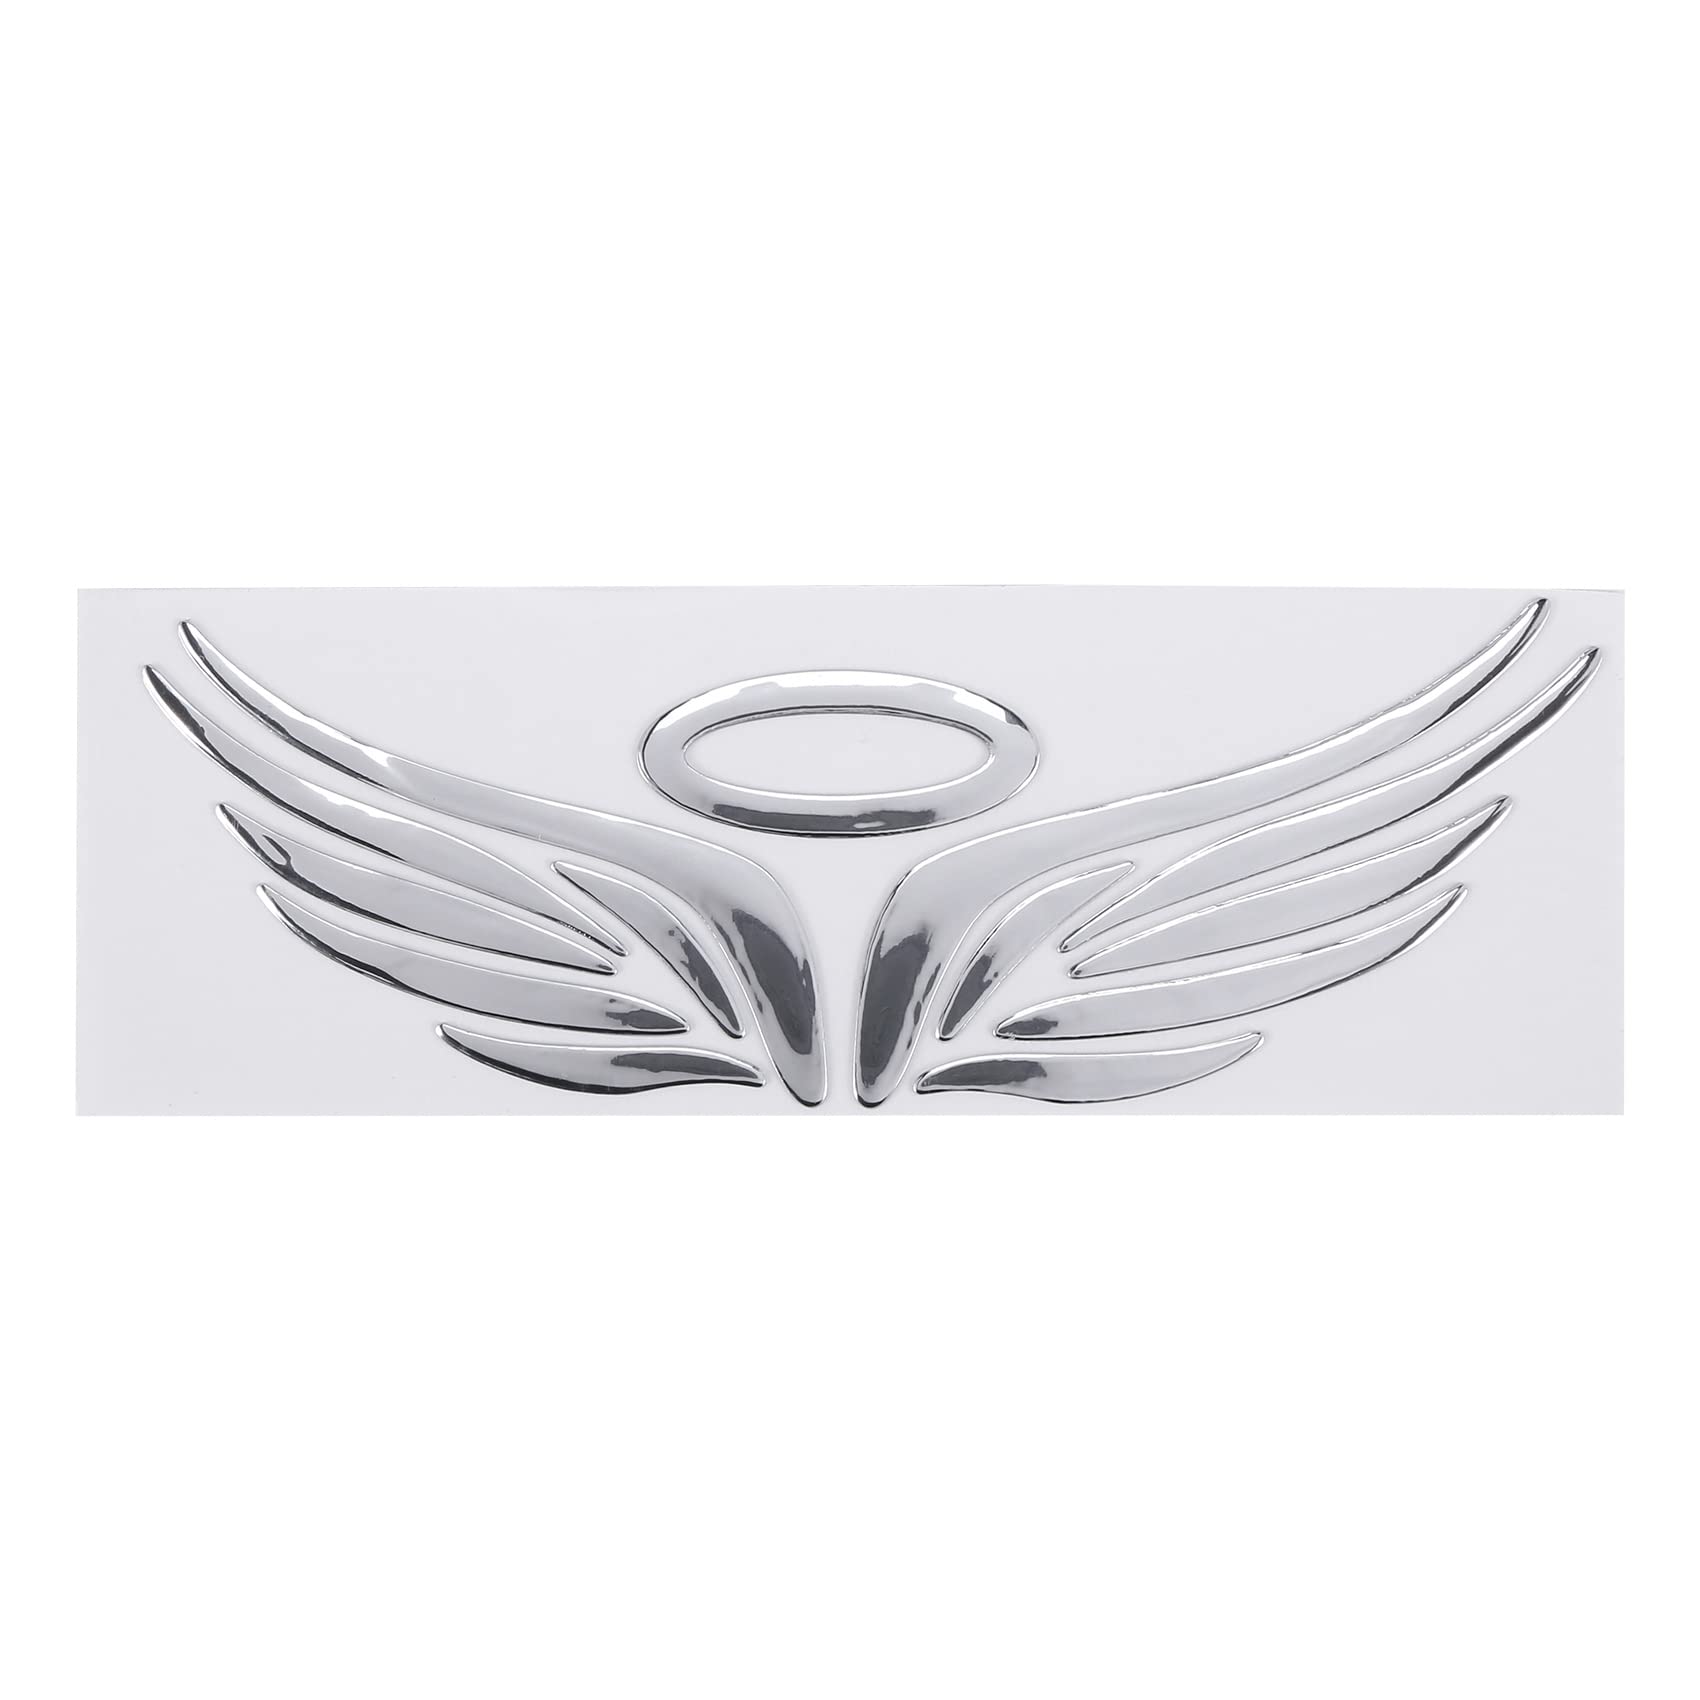 Sadkyer 3D-Chrom-Engelsflügel-Aufkleber, Auto-Emblem, Dekoration, Farbe: Silber von Sadkyer